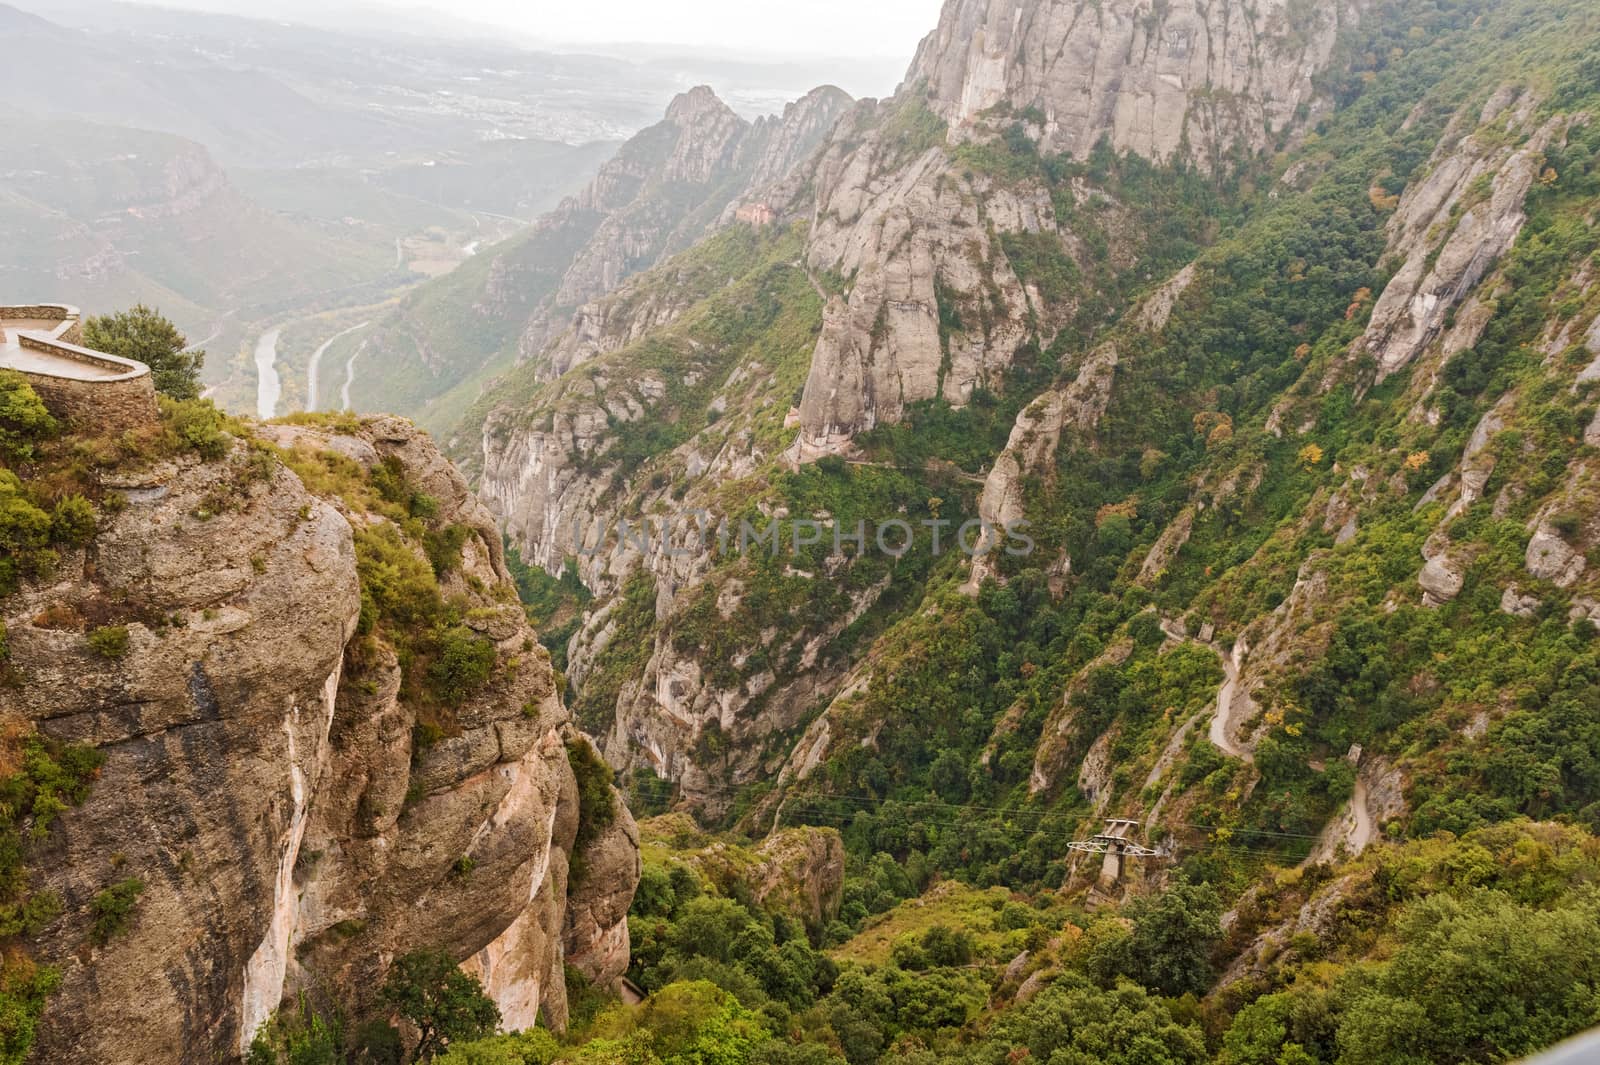 Montserrat mountain near Barcelona in Catalonia, Spain by Marcus